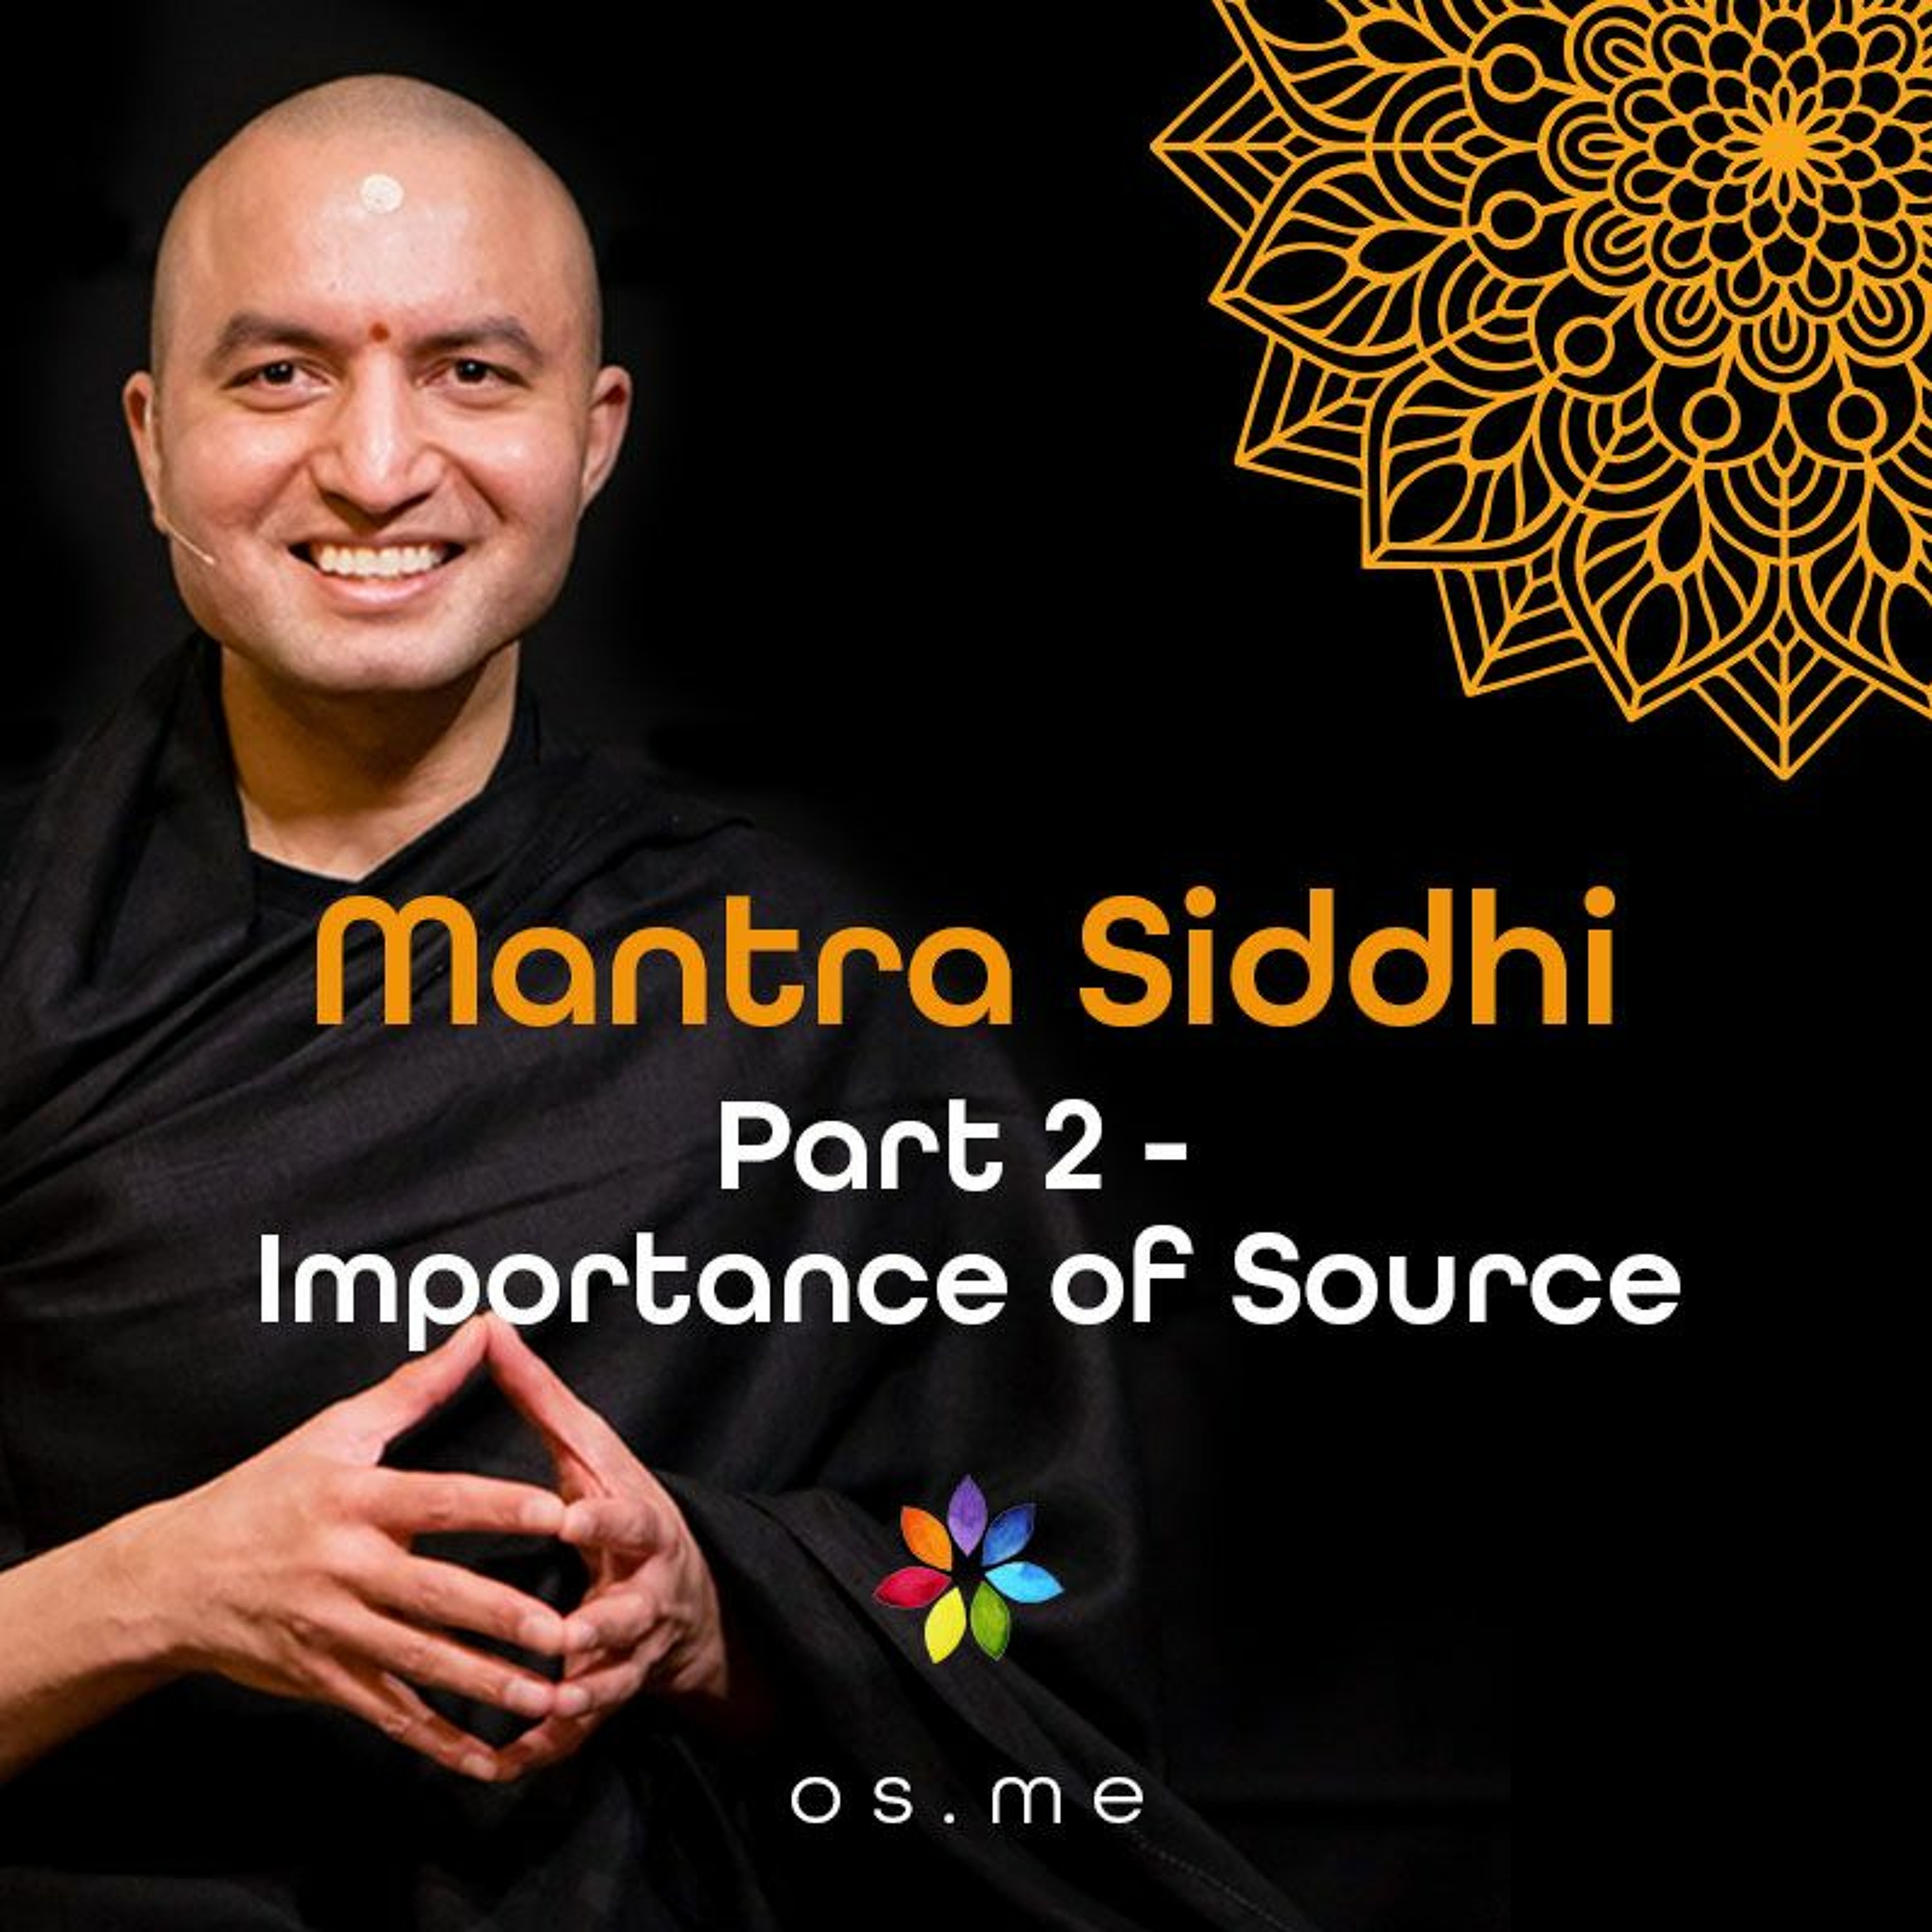 Attaining Mantra Siddhi Part 2 - Importance of Source [Hindi]